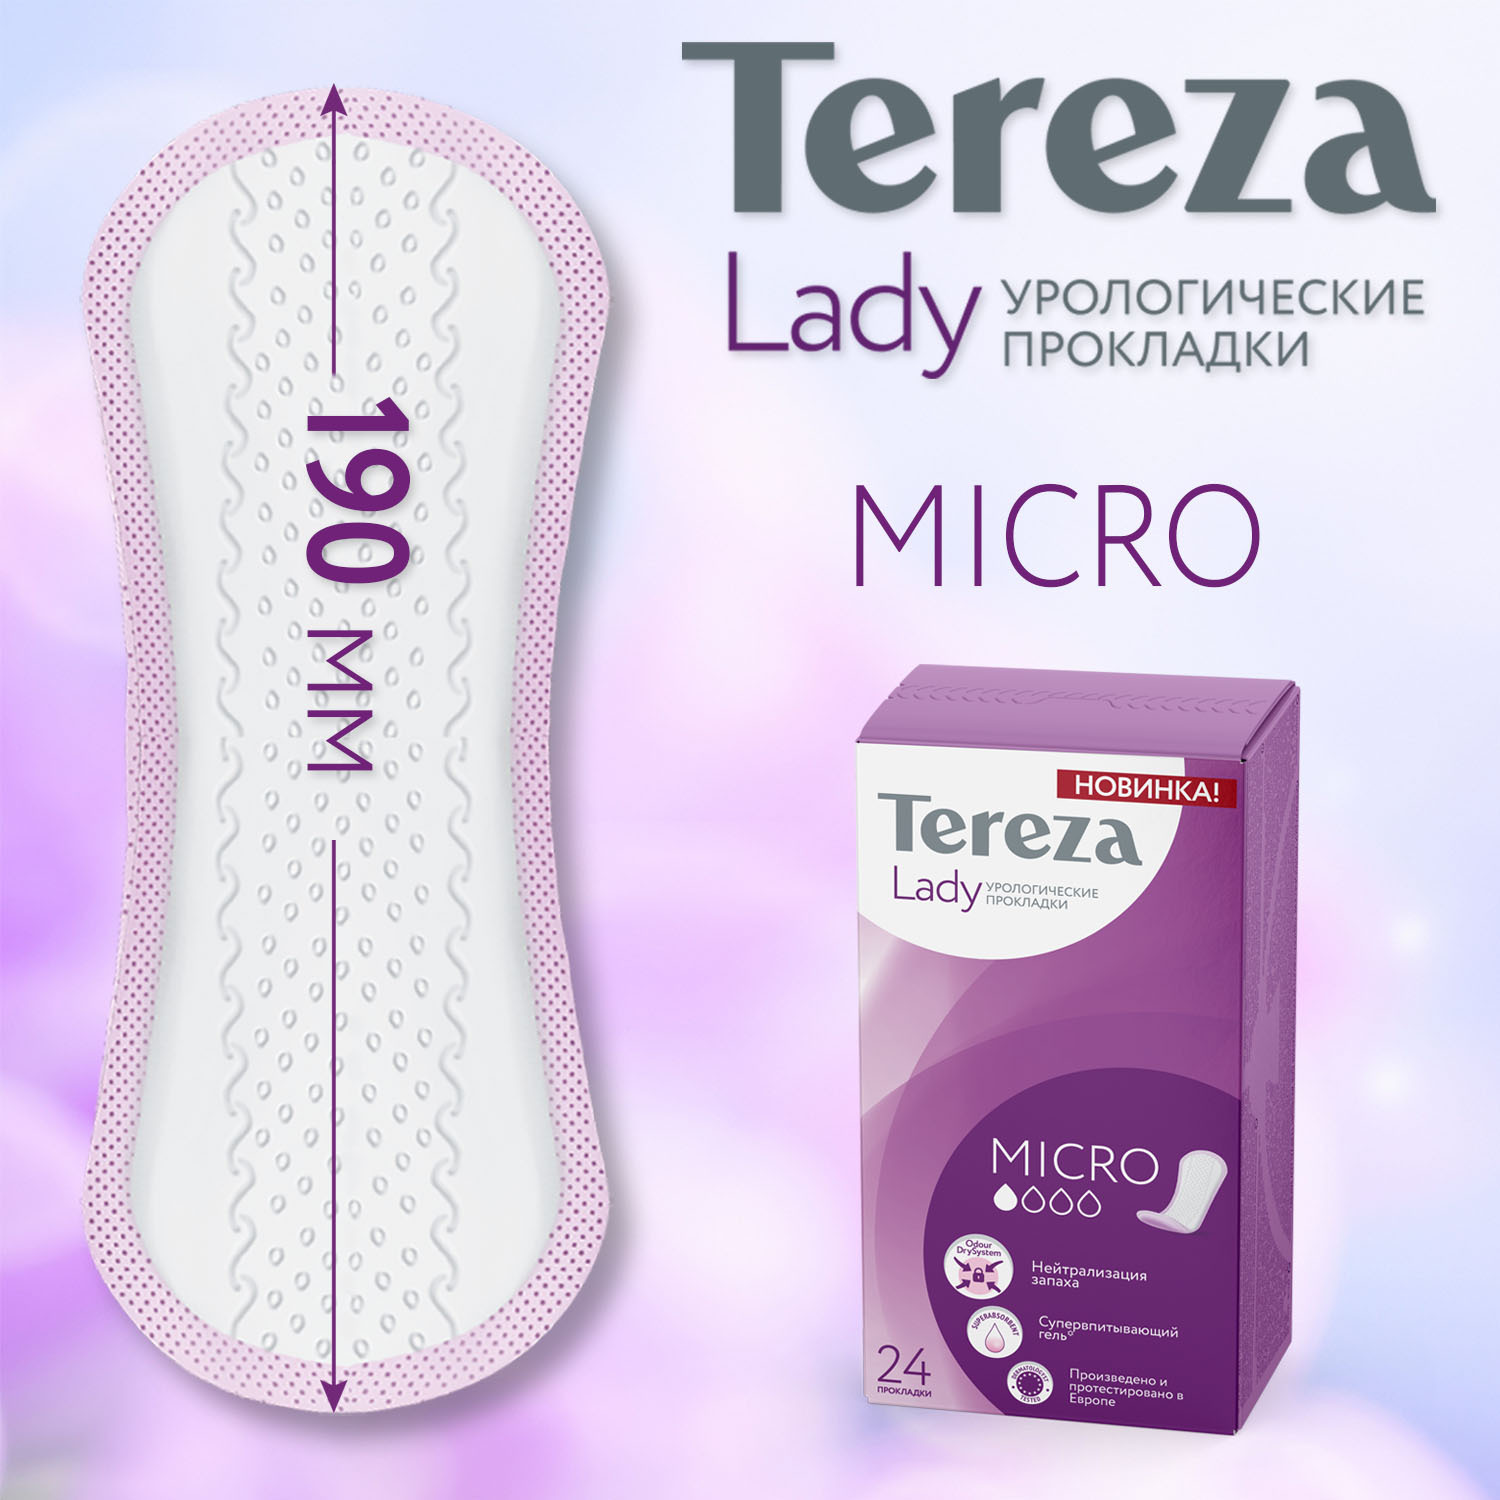 Микро прокладки. TEREZALADY прокладки урологические Micro/микро. Прокладки урологические Tereza Lady Micro 24шт. Прокладки TEREZALADY урологические женские микро 24шт.